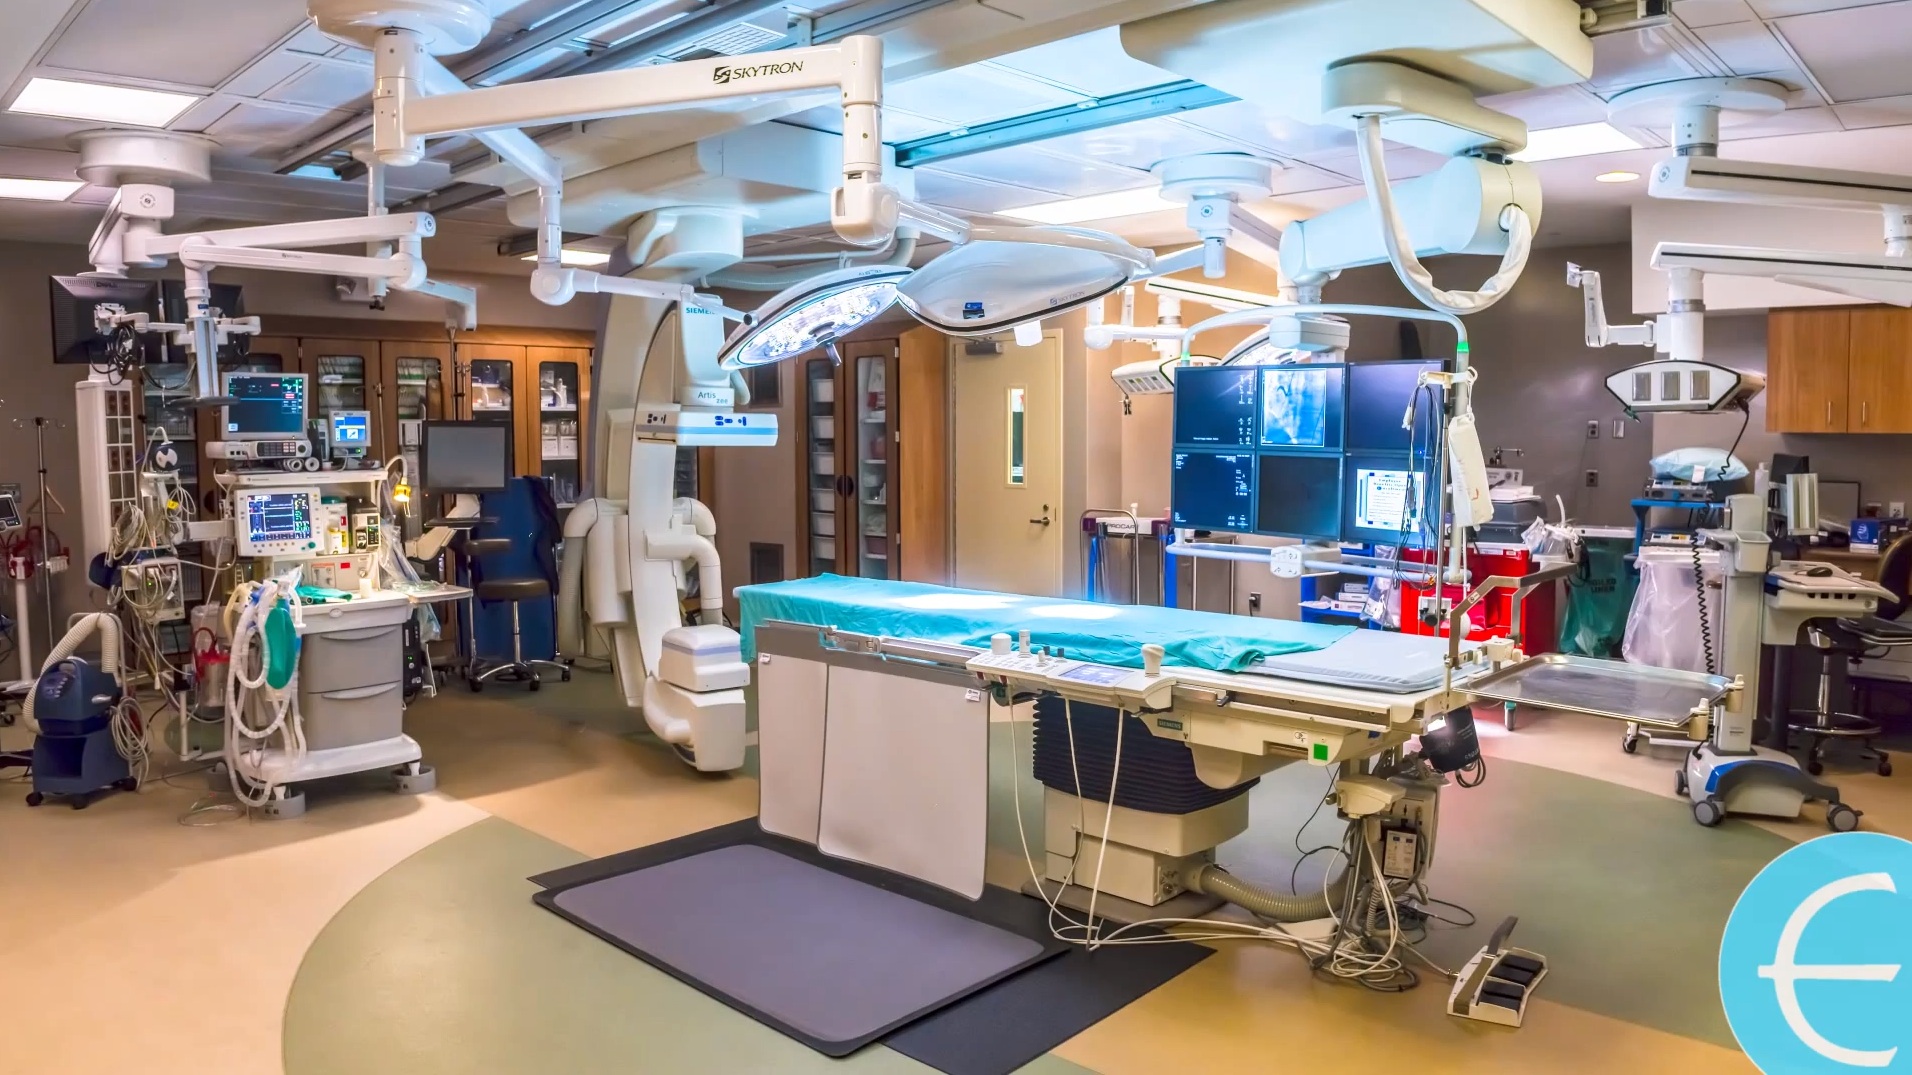 Hybrid-OR-Operating-Room-Siemens-Artis-Zee-Ceiling-Mount-Imaging-System-Skytron-LED-Surgical-Lights-Booms-Englewood Hospital-NJ-1.jpg